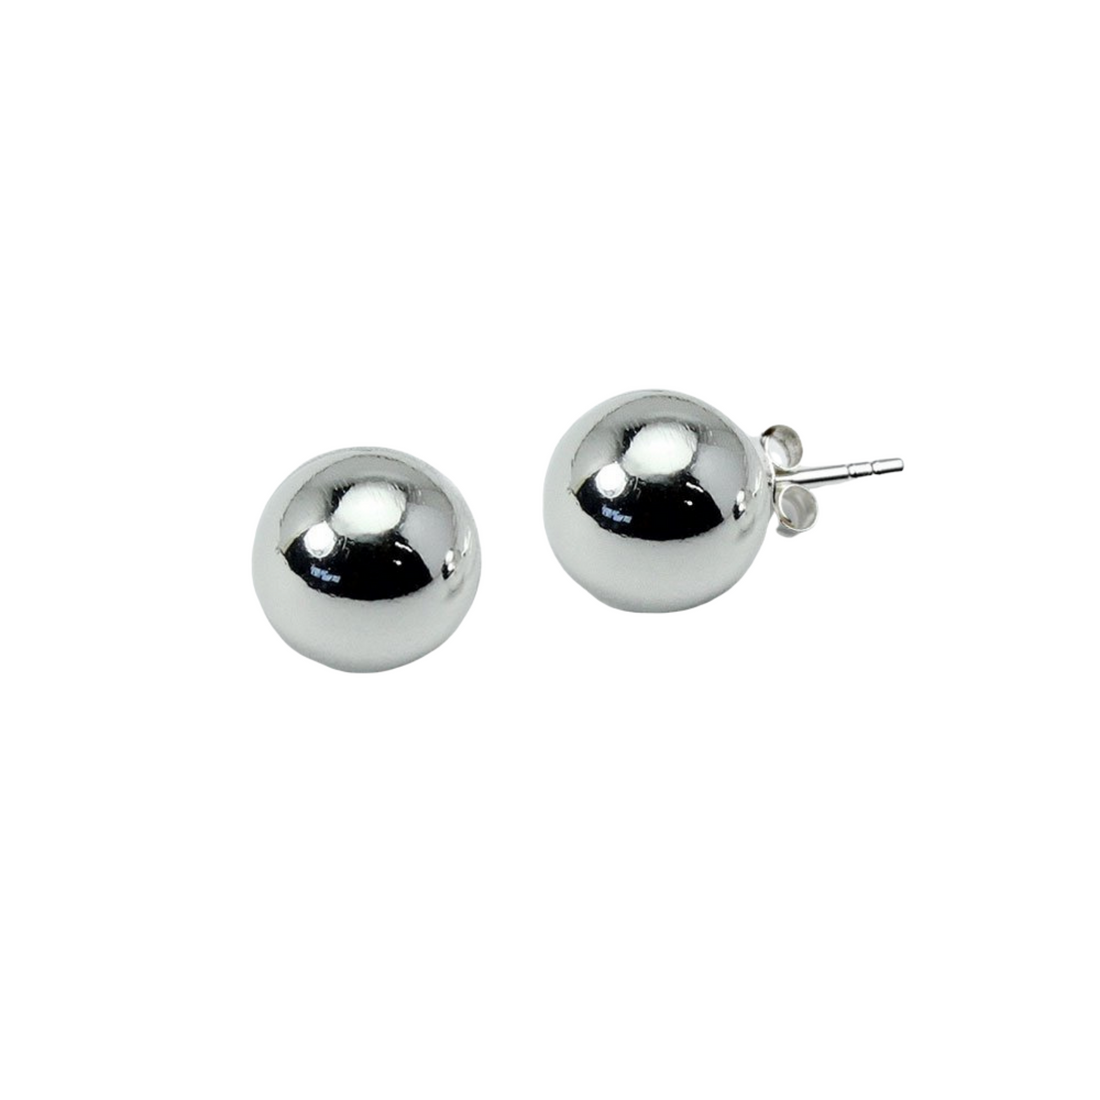 High polish sterling silver 10mm ball stud earrings.